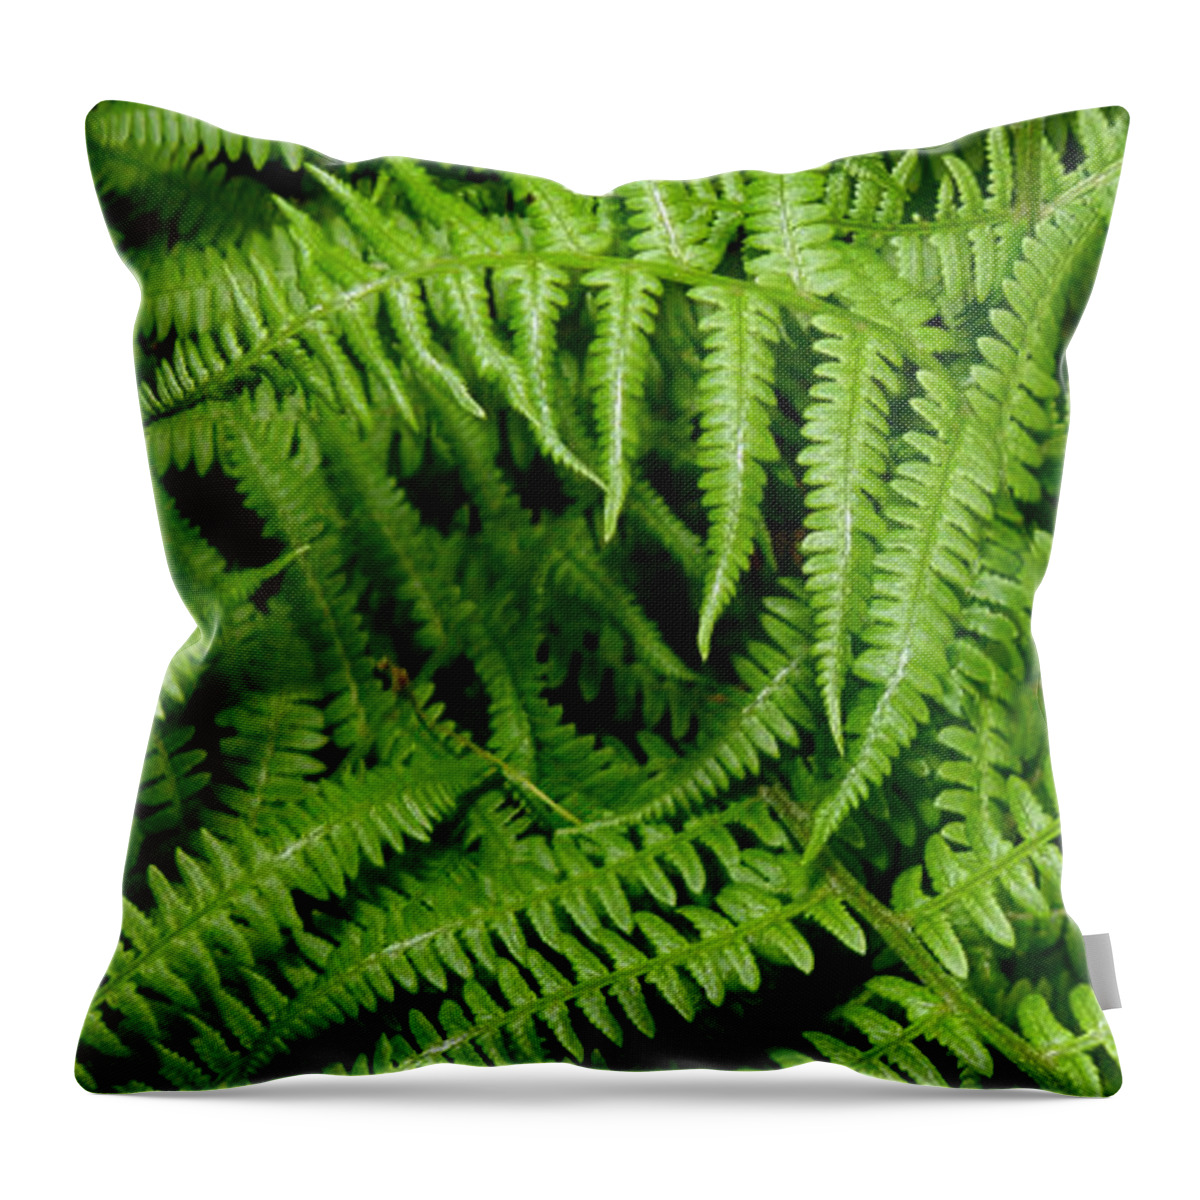 Ferns Throw Pillow featuring the photograph Ferns by Kim Galluzzo Wozniak